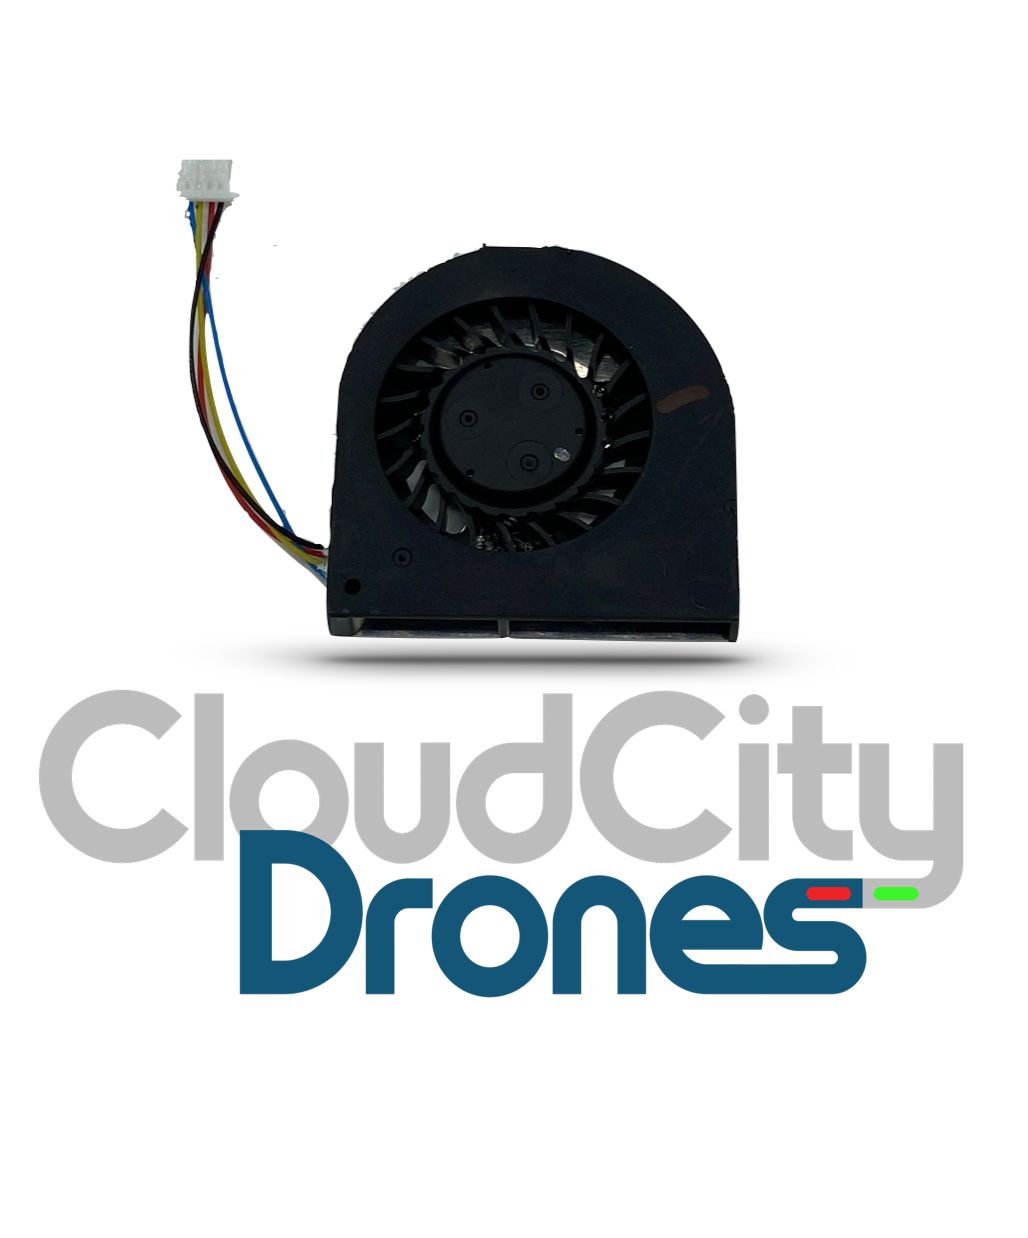 Mavic Air 2 Fan Module - Cloud City Drones